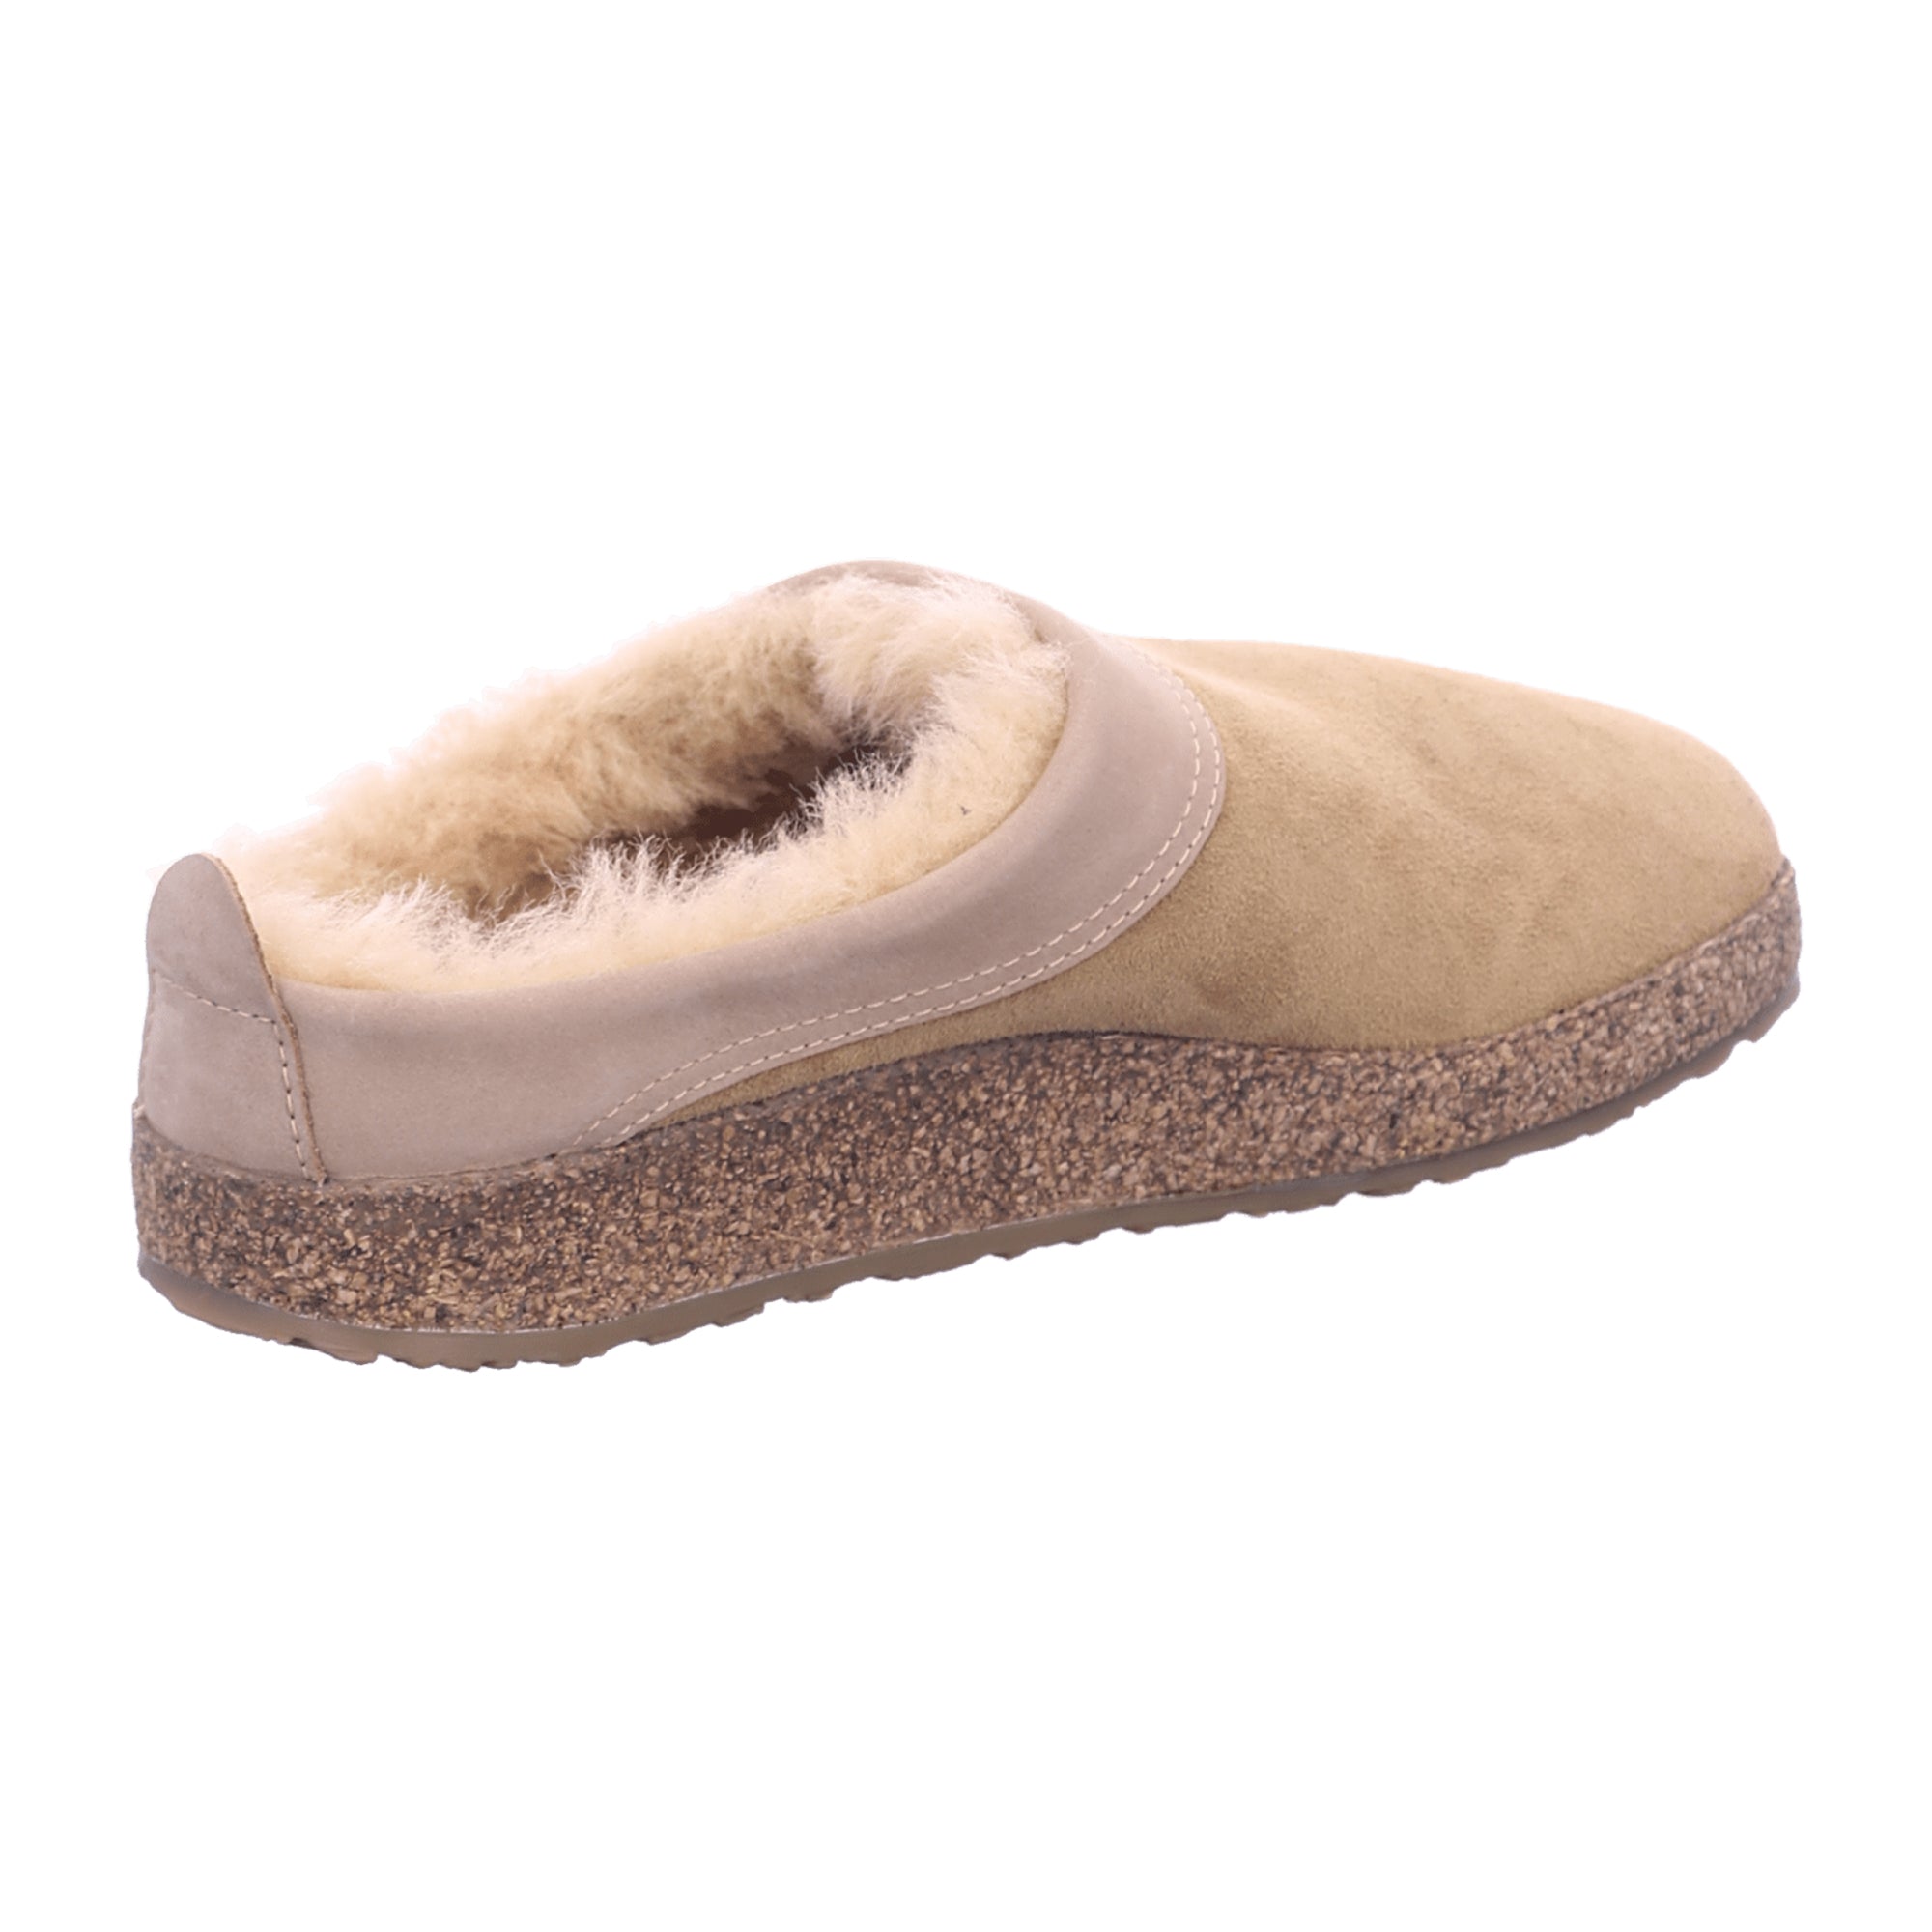 Haflinger Women’s 713015 Slippers in Beige – Stylish & Comfortable